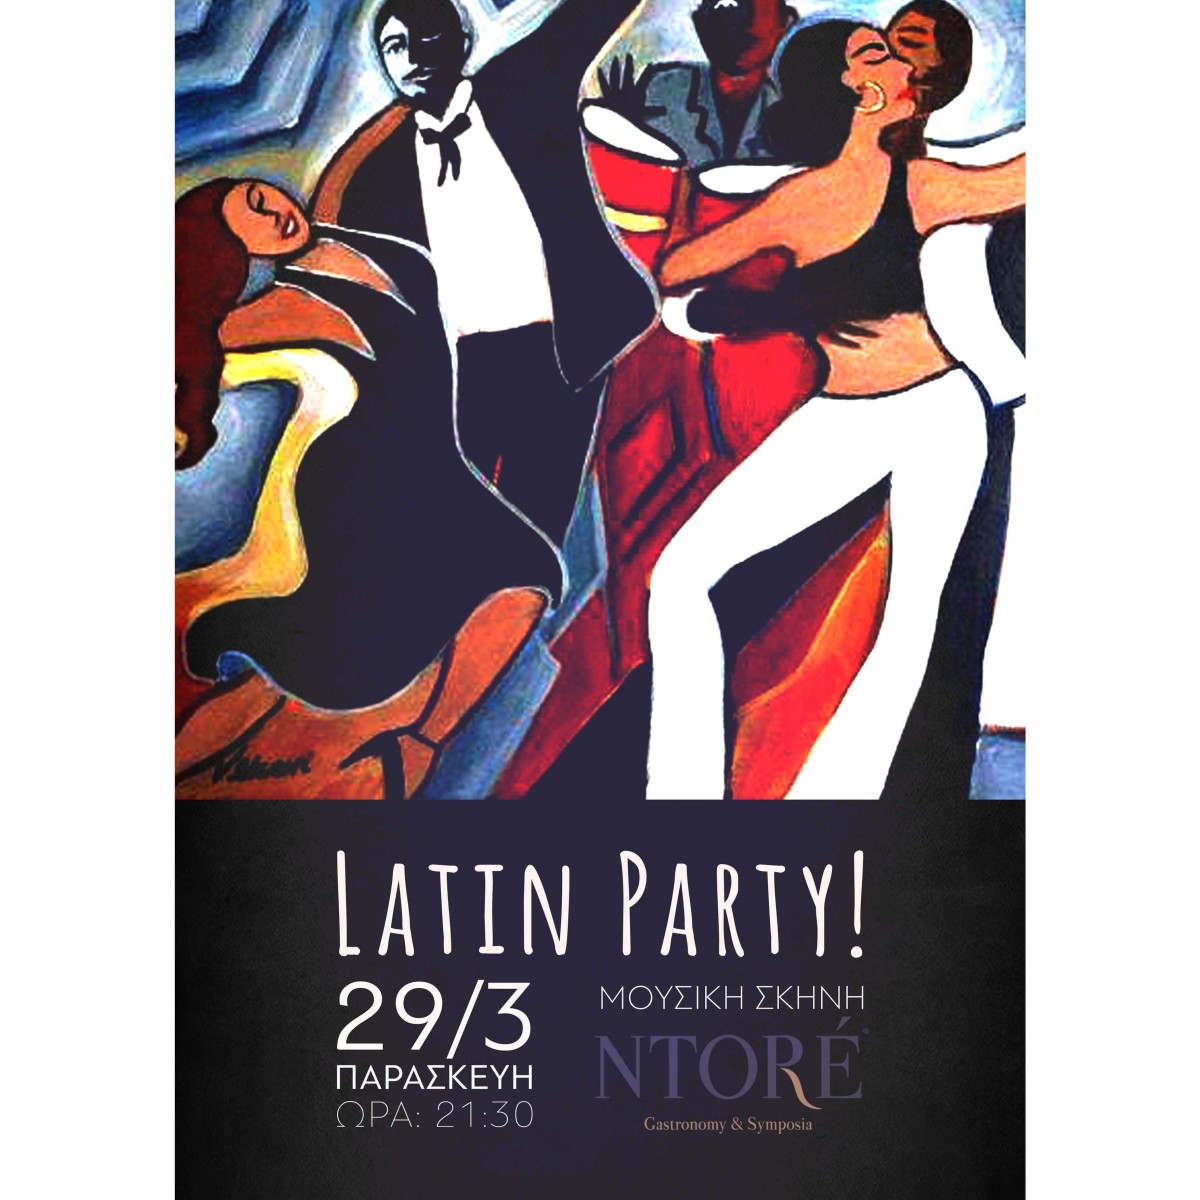 Latin Party στη Μουσική Σκηνή του Ntoré, Παρασκευή 29 Μαρτίου, 21:30